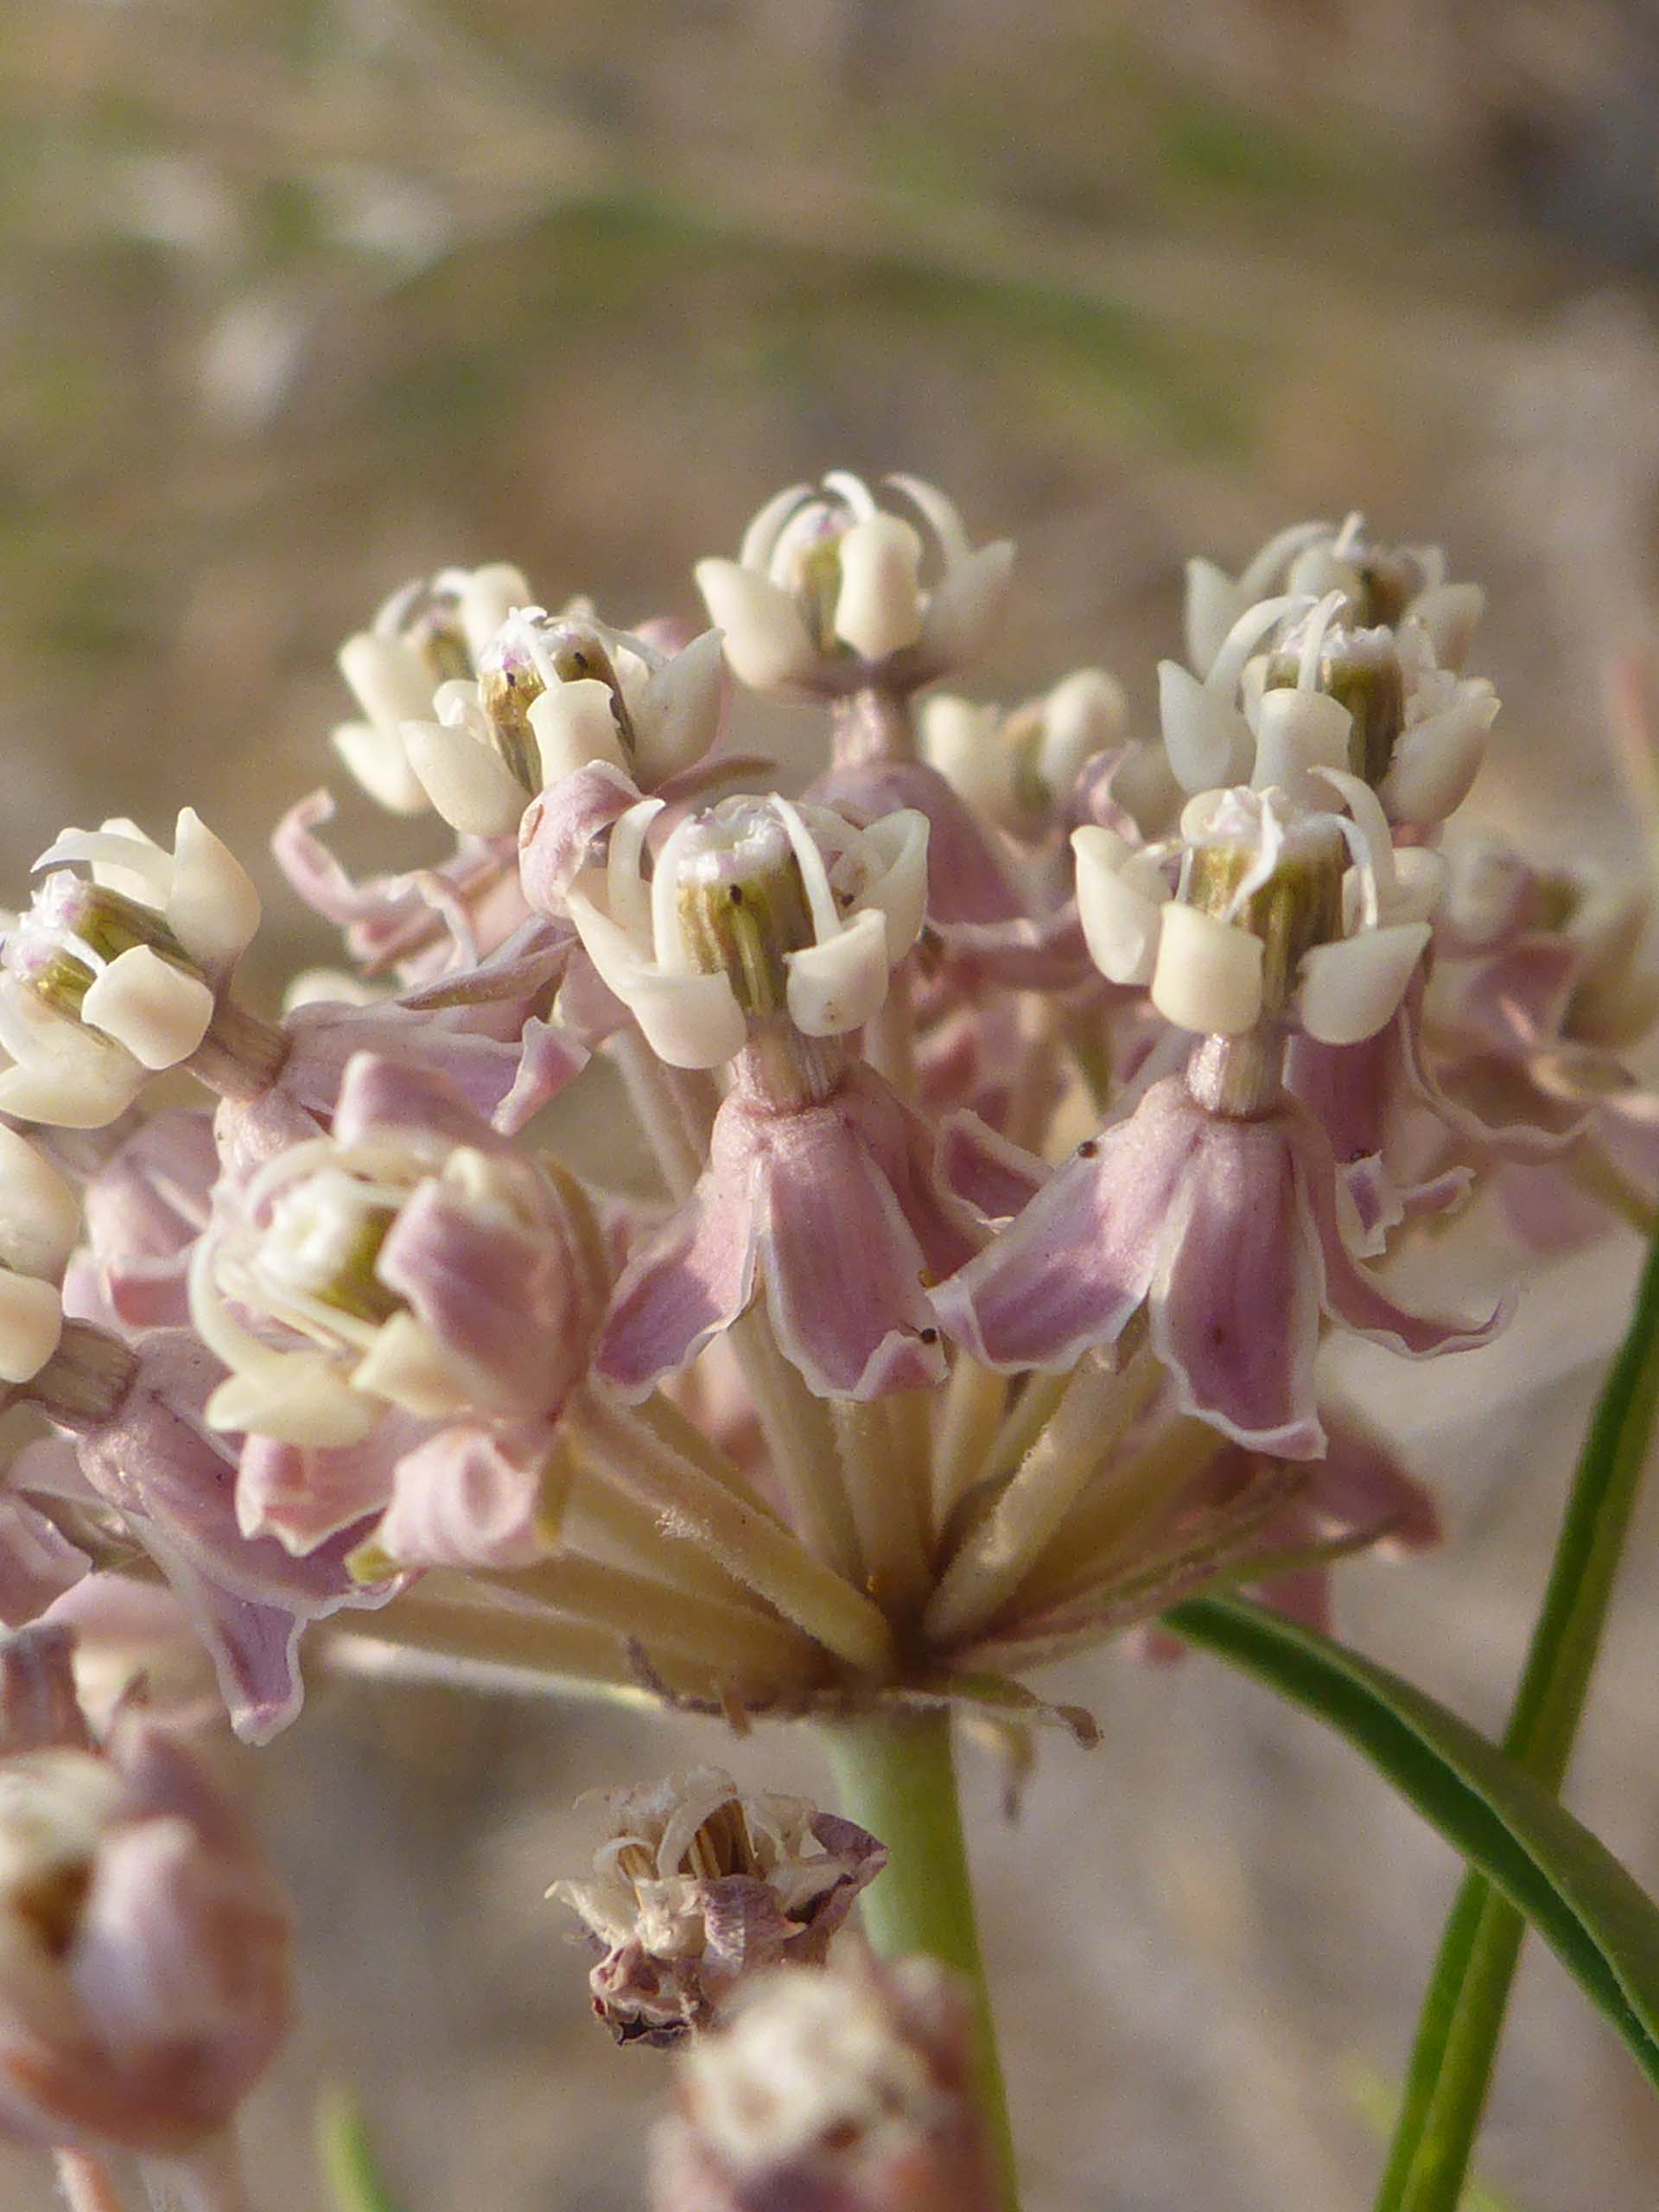 Narrow-leaved milkweed close-up. D. Burk.